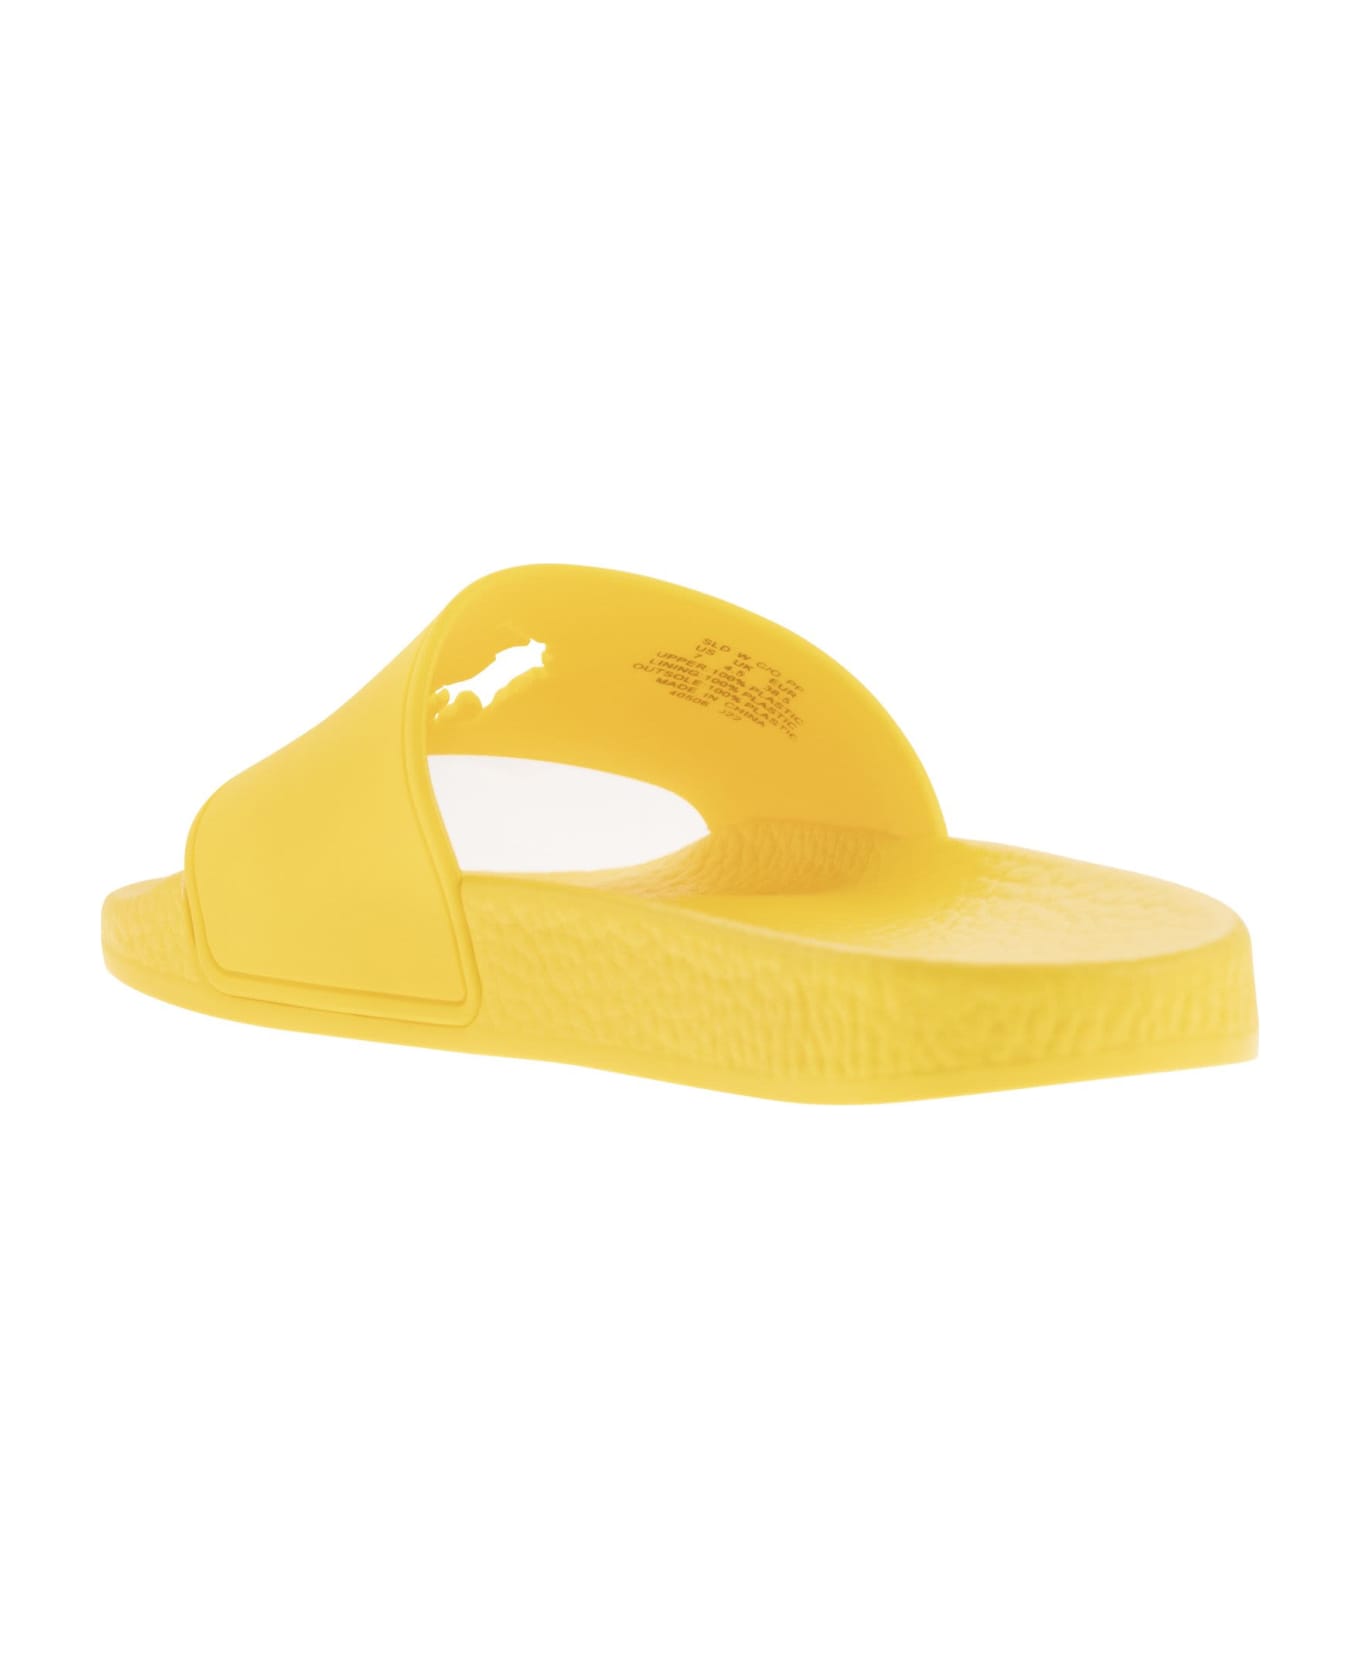 Polo Ralph Lauren Big Pony Slippers - Yellow